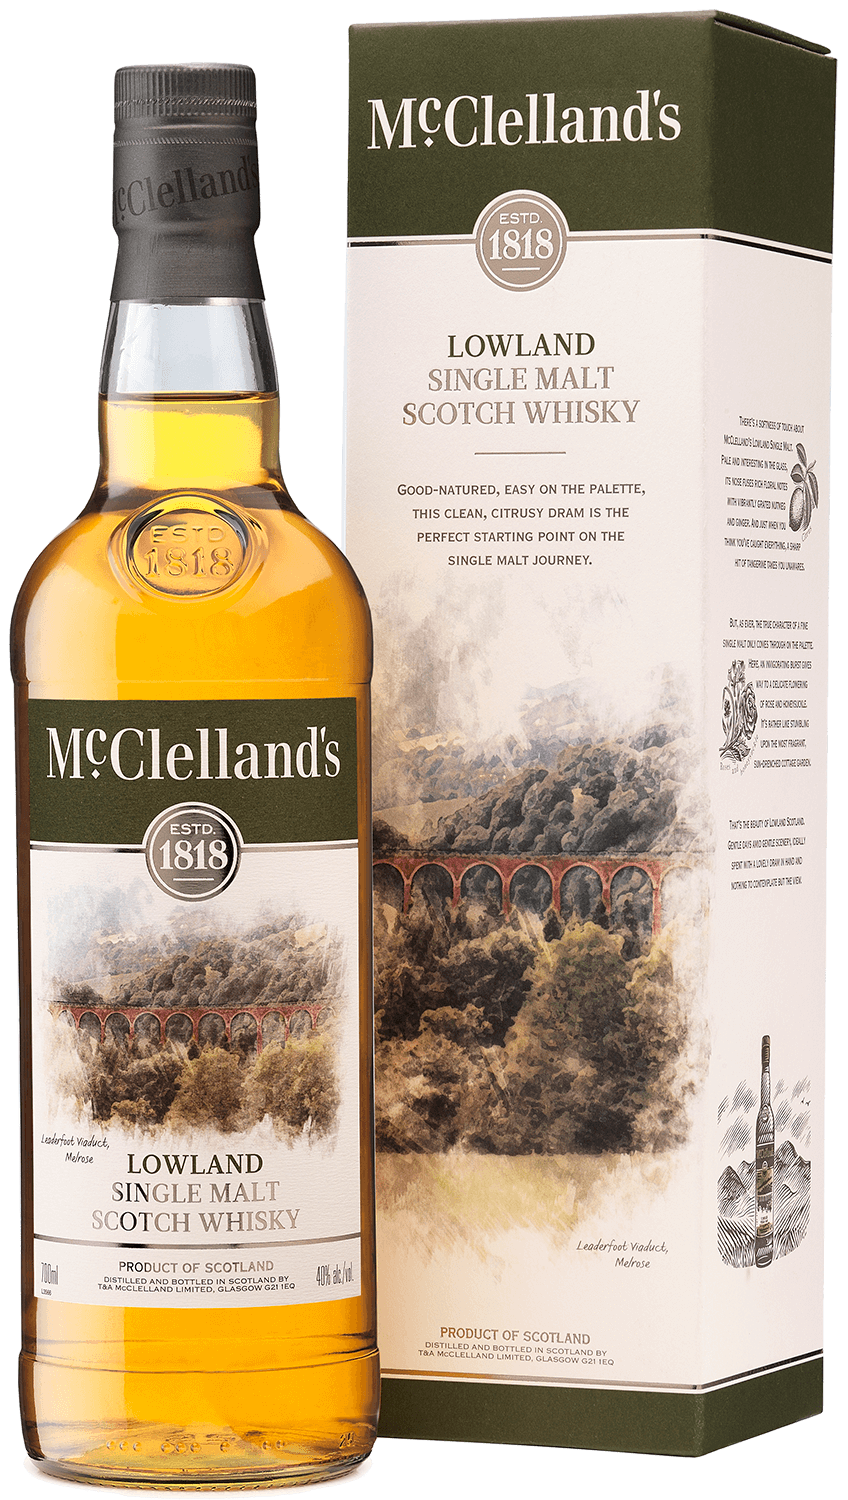 McClelland's Lowland single malt scotch whisky (gift box) glen scotia victoriana single malt scotch whisky gift box